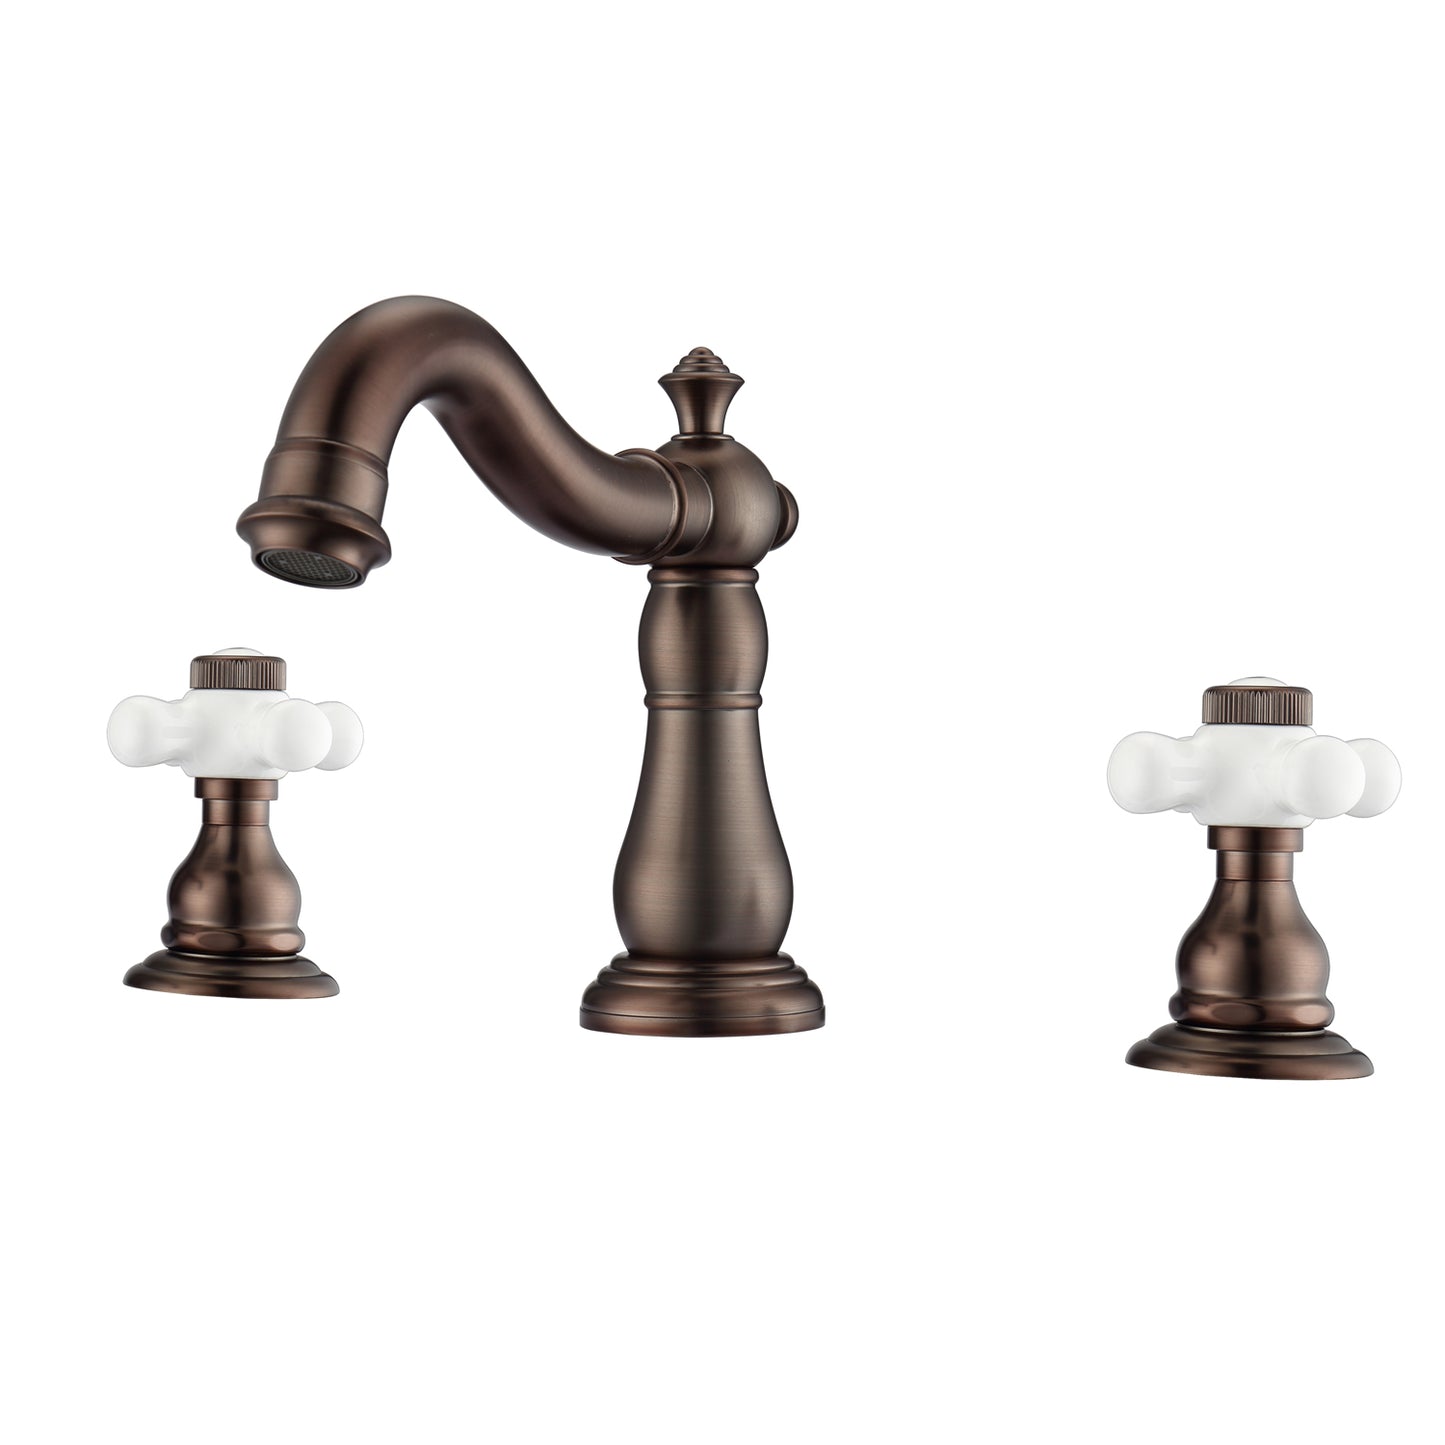 Aldora 8" Widespread Oil Rubbed Bronze Bathroom Faucet with Porcelain Cross Handles